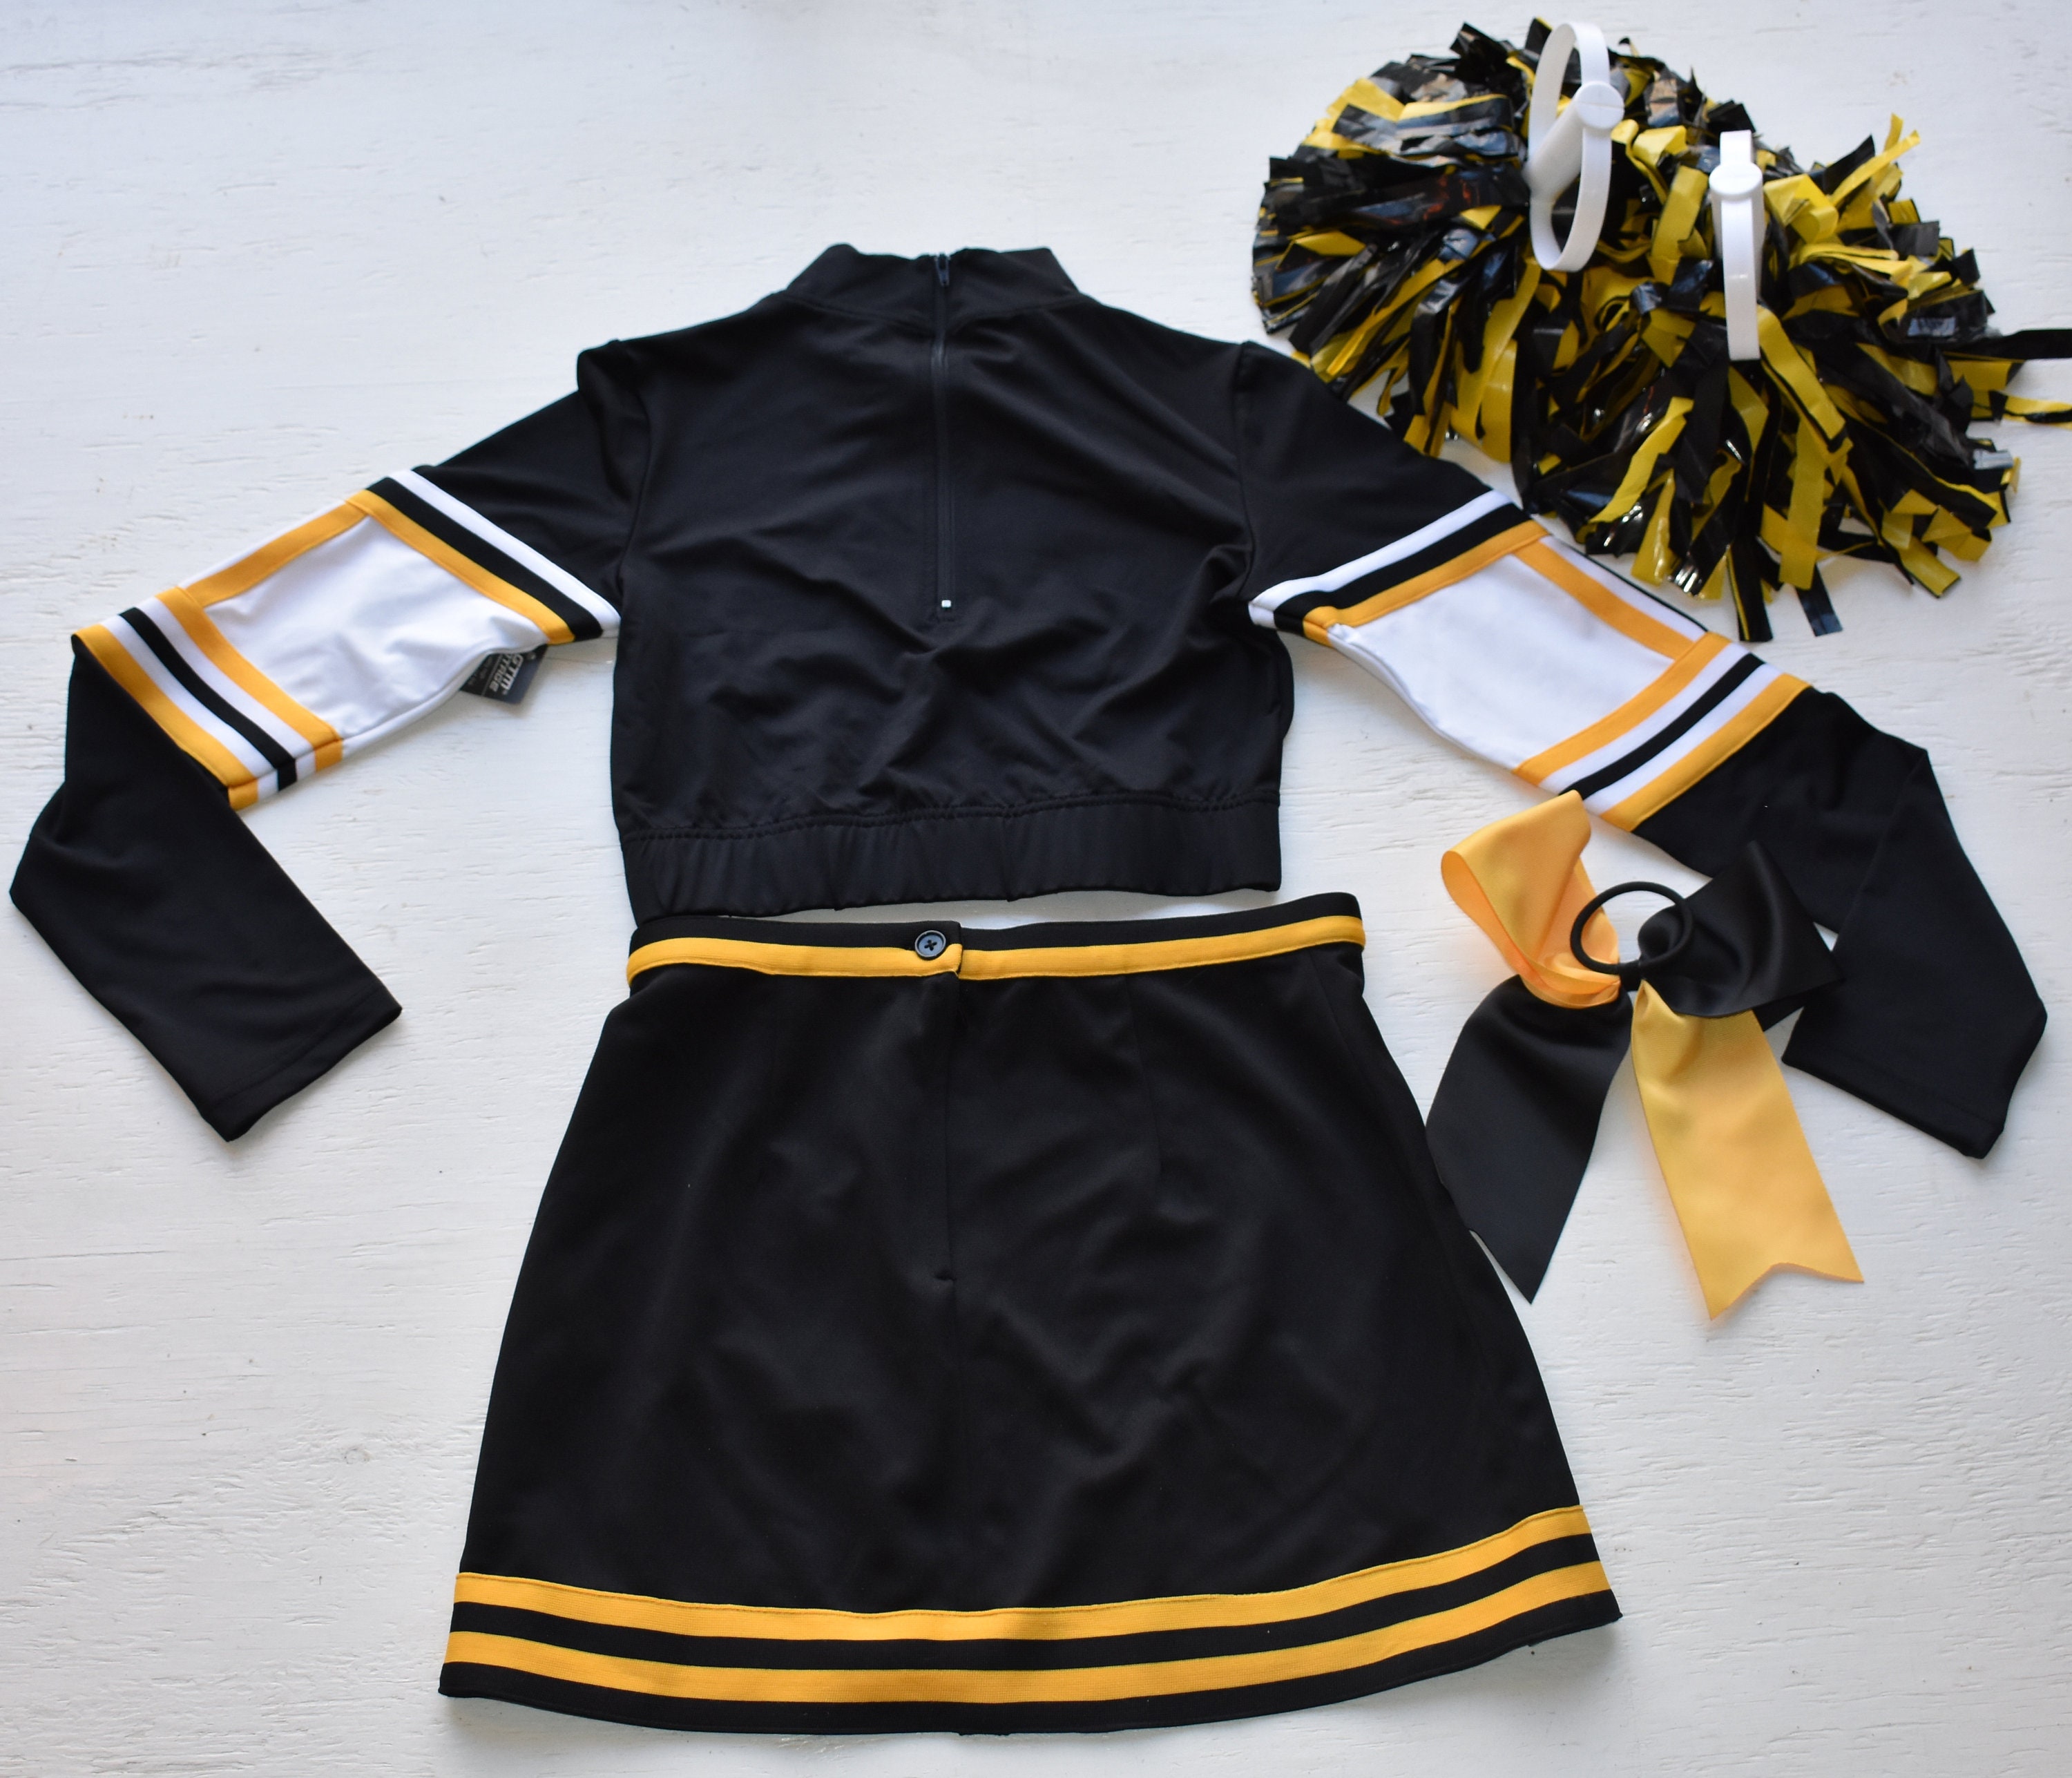 Details about   Adult GOLD BLACK Cheerleader Uniform Top Skirt 32-34/22-25" Cosplay Steelers NEW 